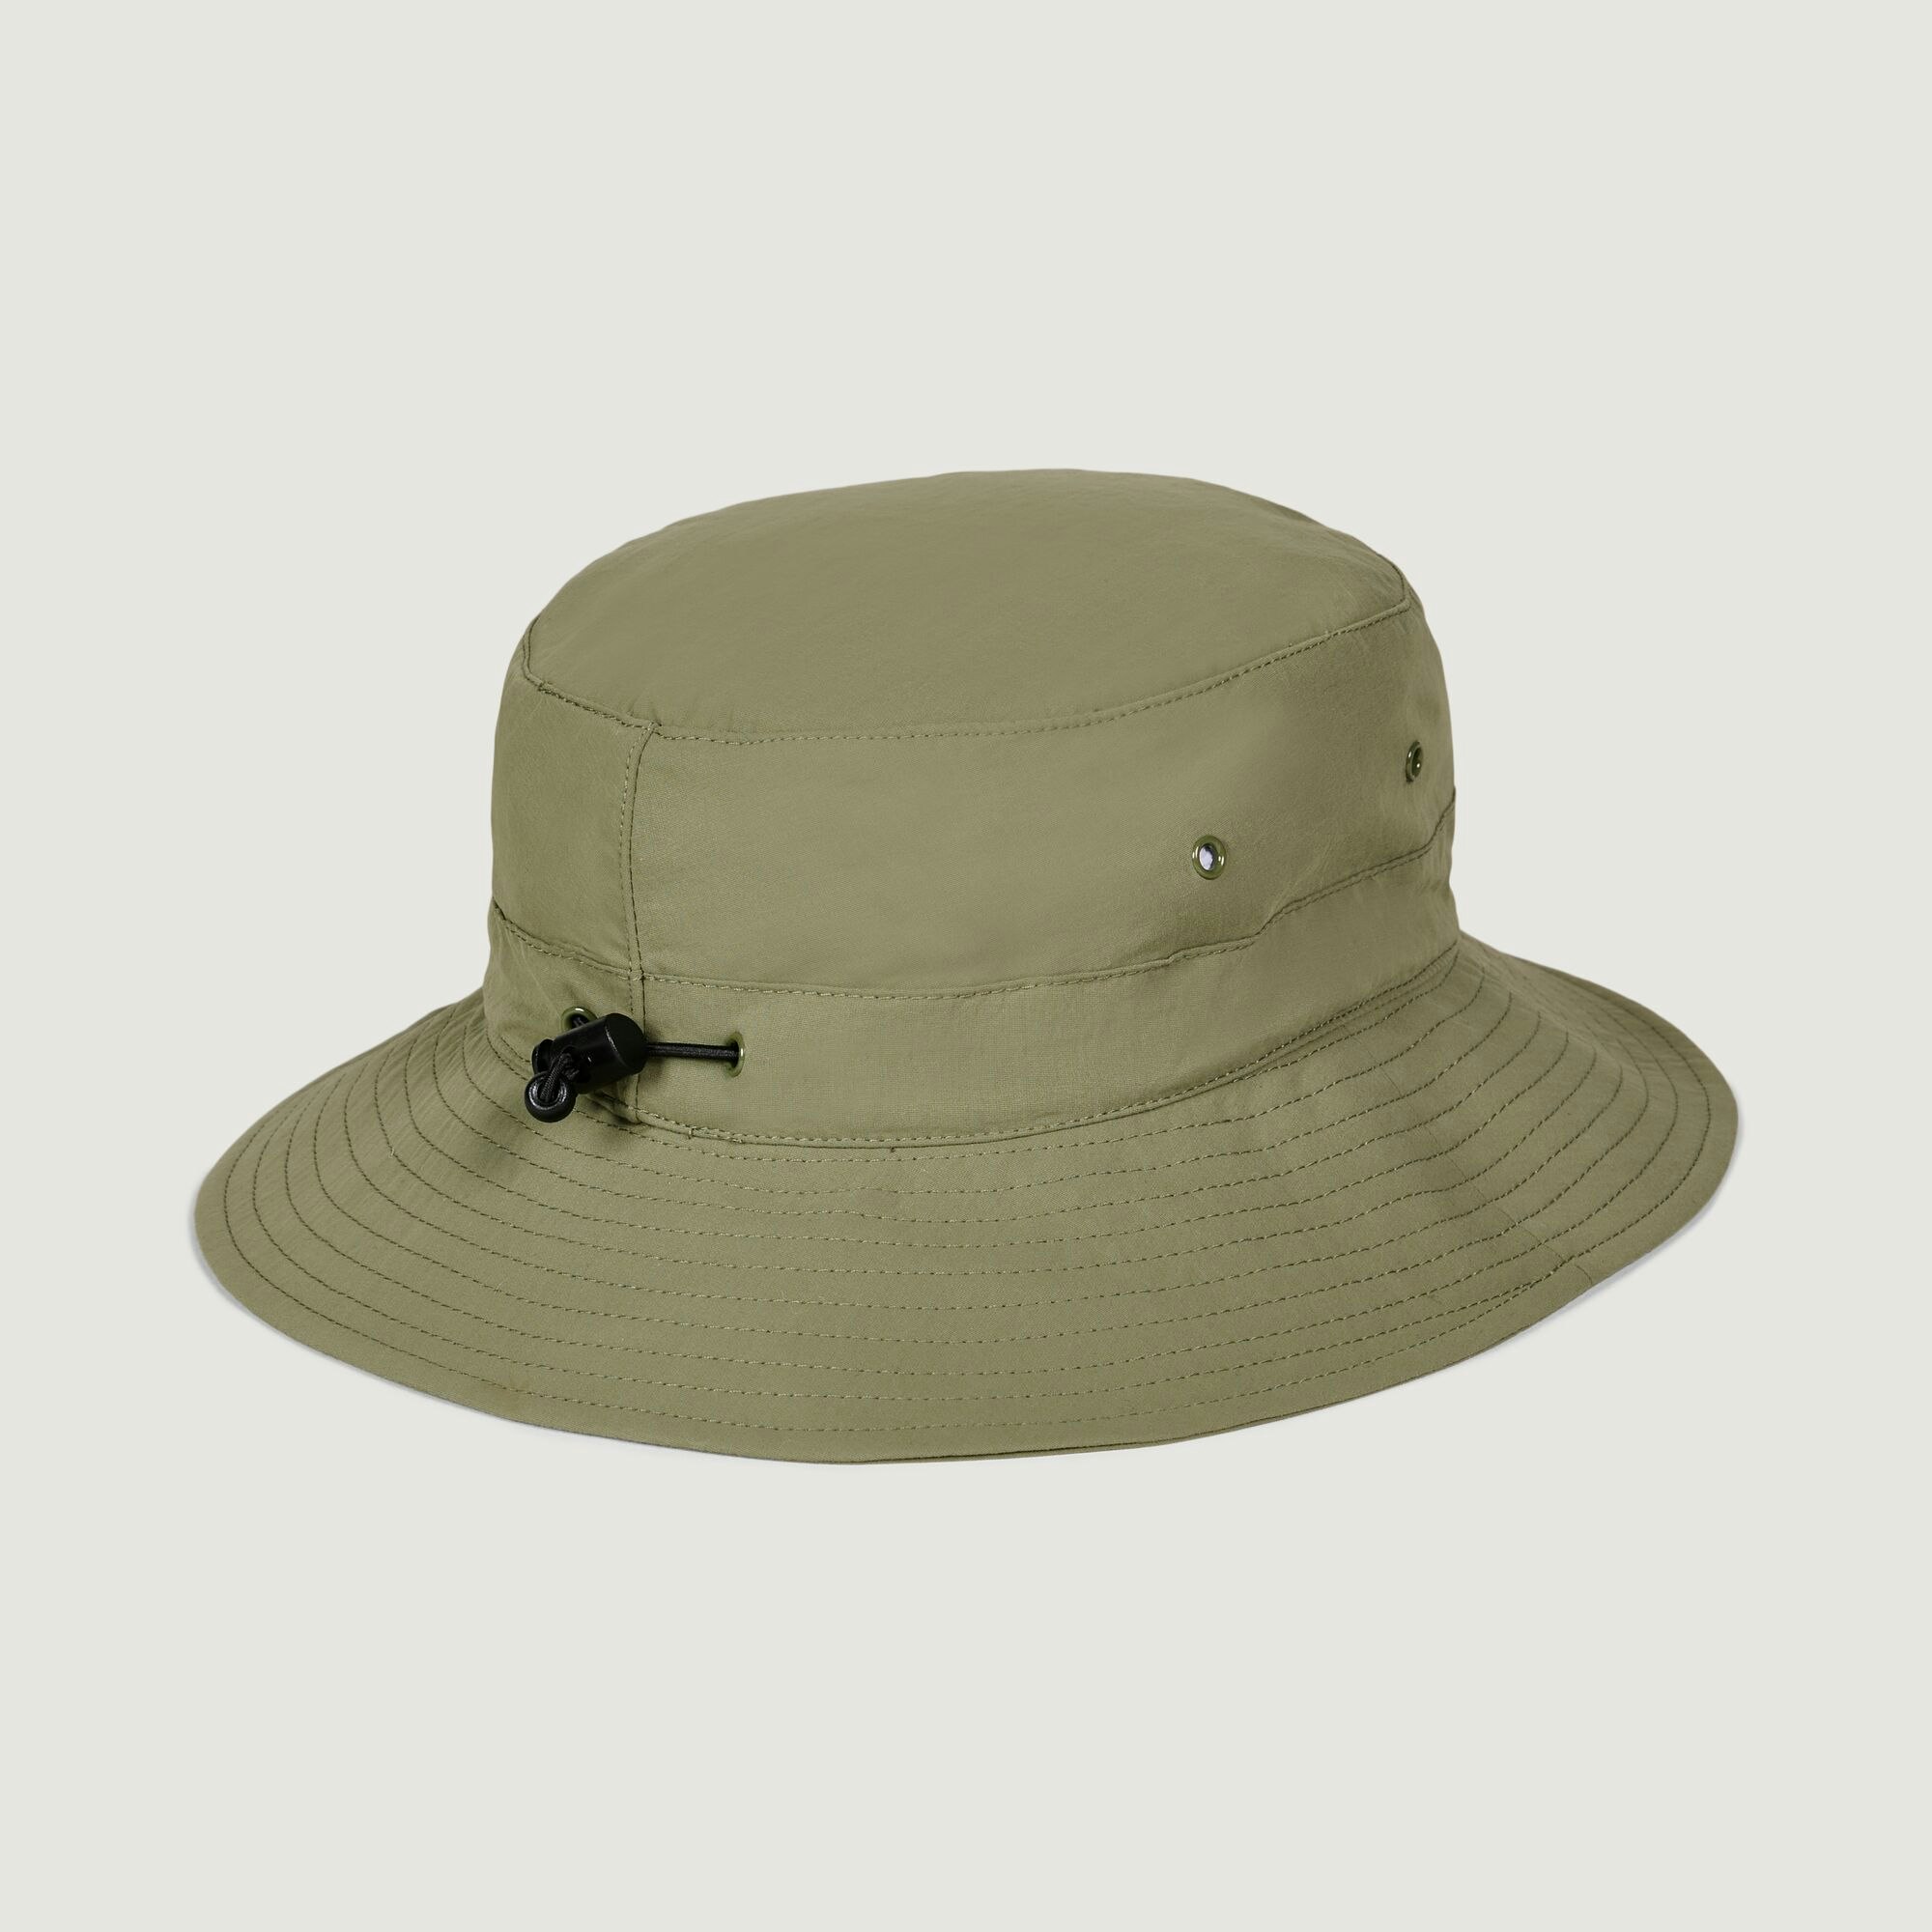 EVRY-Day UPF 50+ Bucket Hat